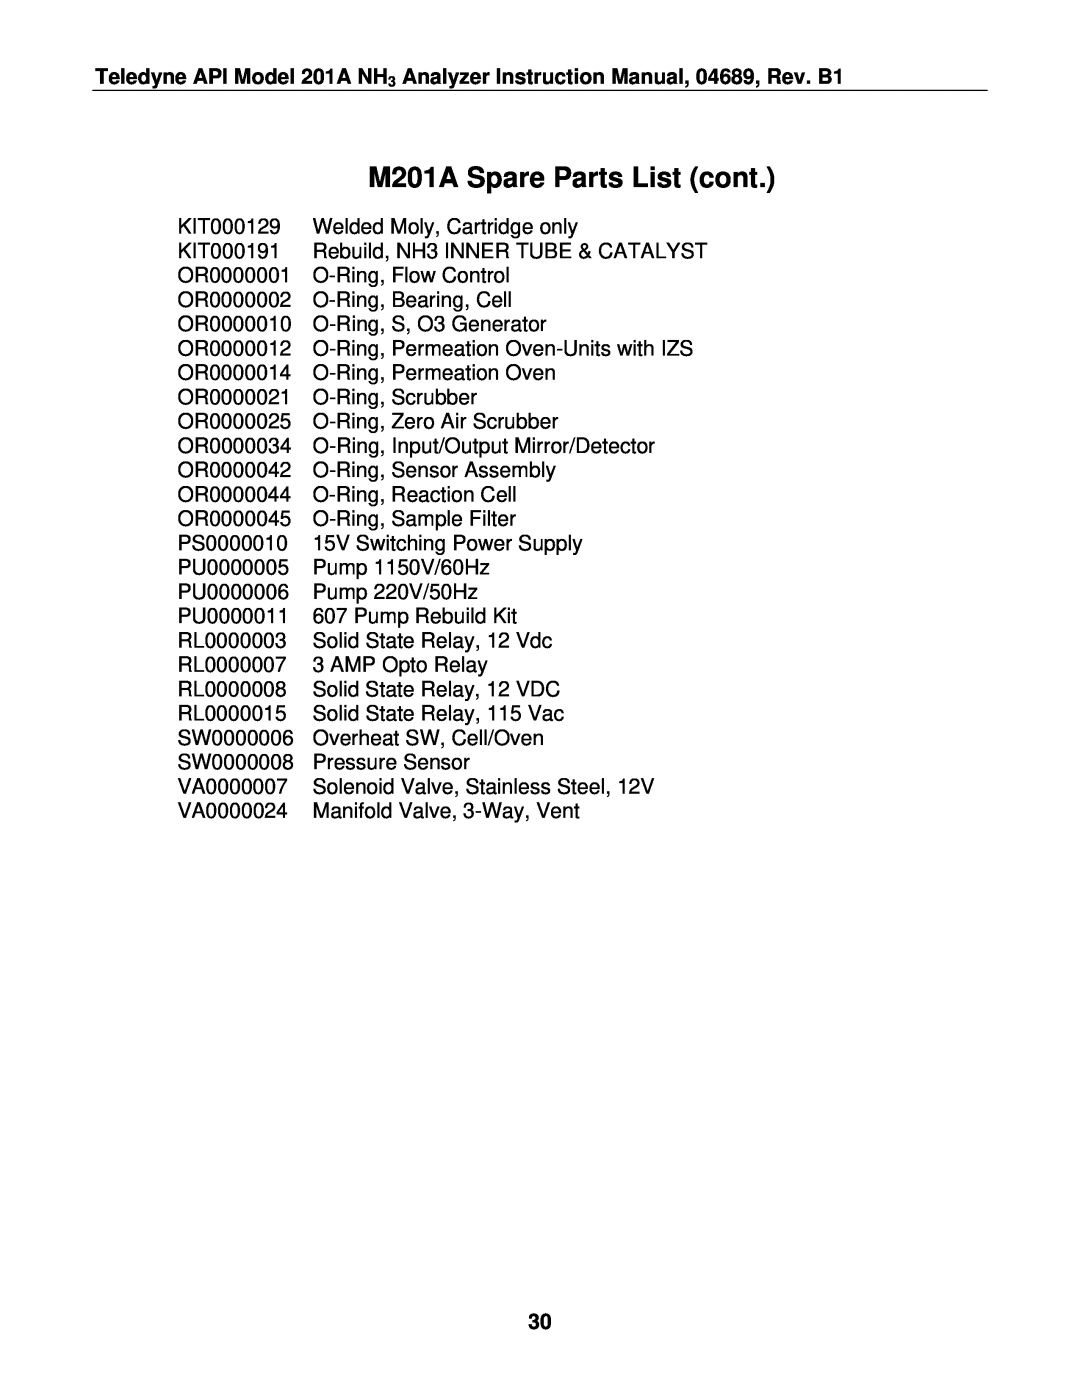 Teledyne manual M201A Spare Parts List cont 